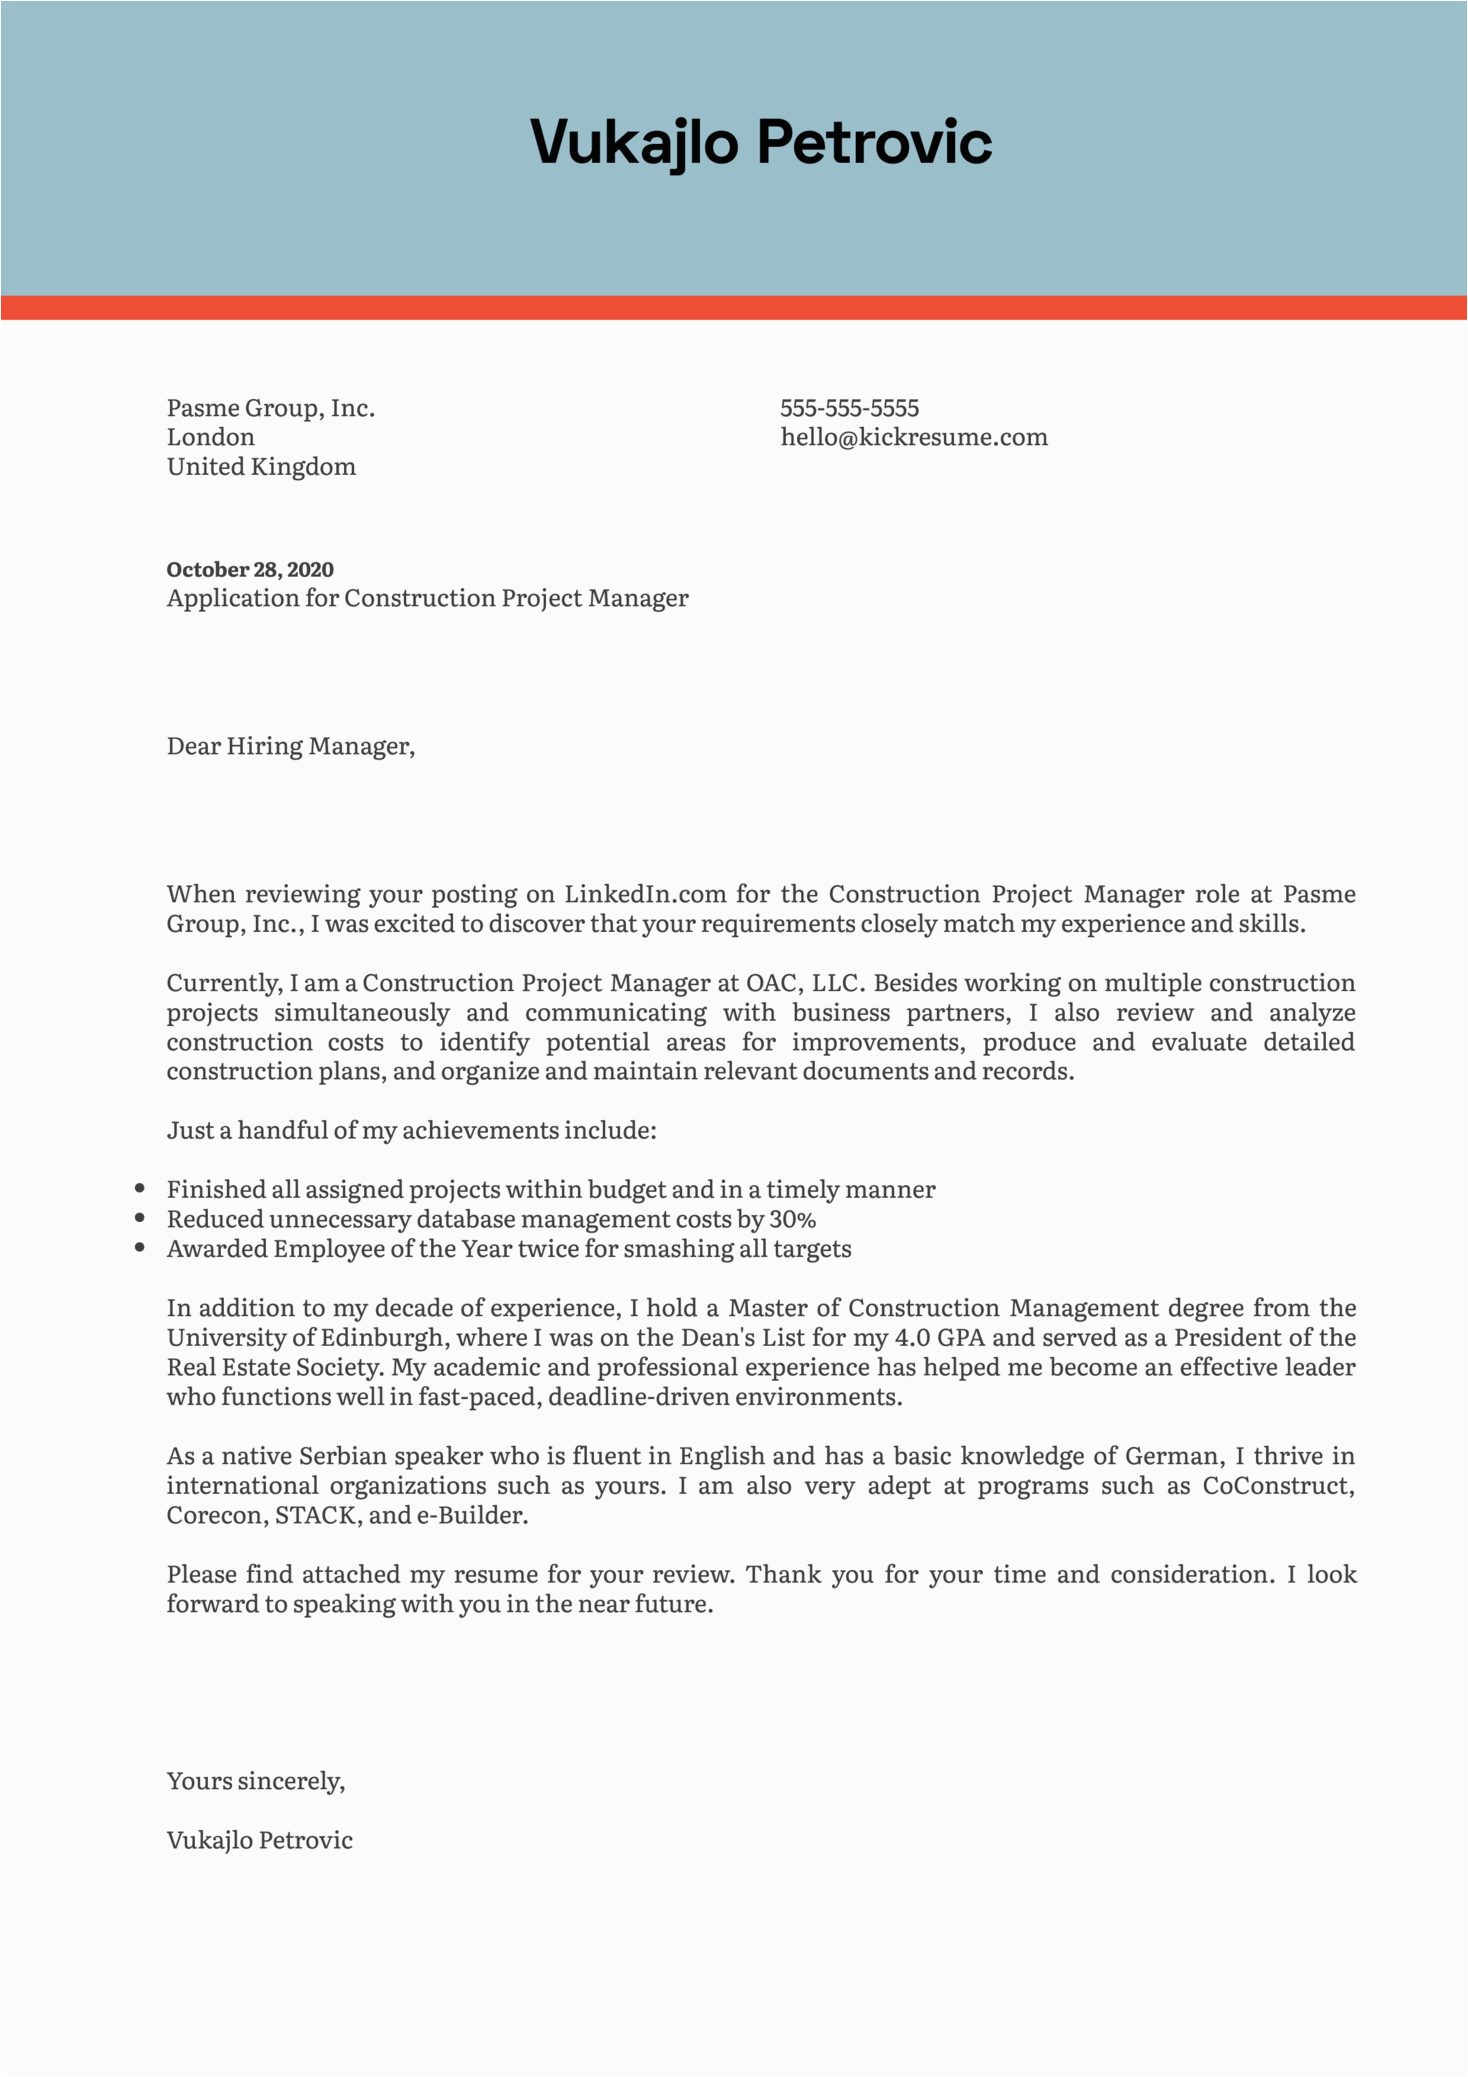 Sample Resume Cover Letter for Construction Manager Construction Project Manager Cover Letter Sample